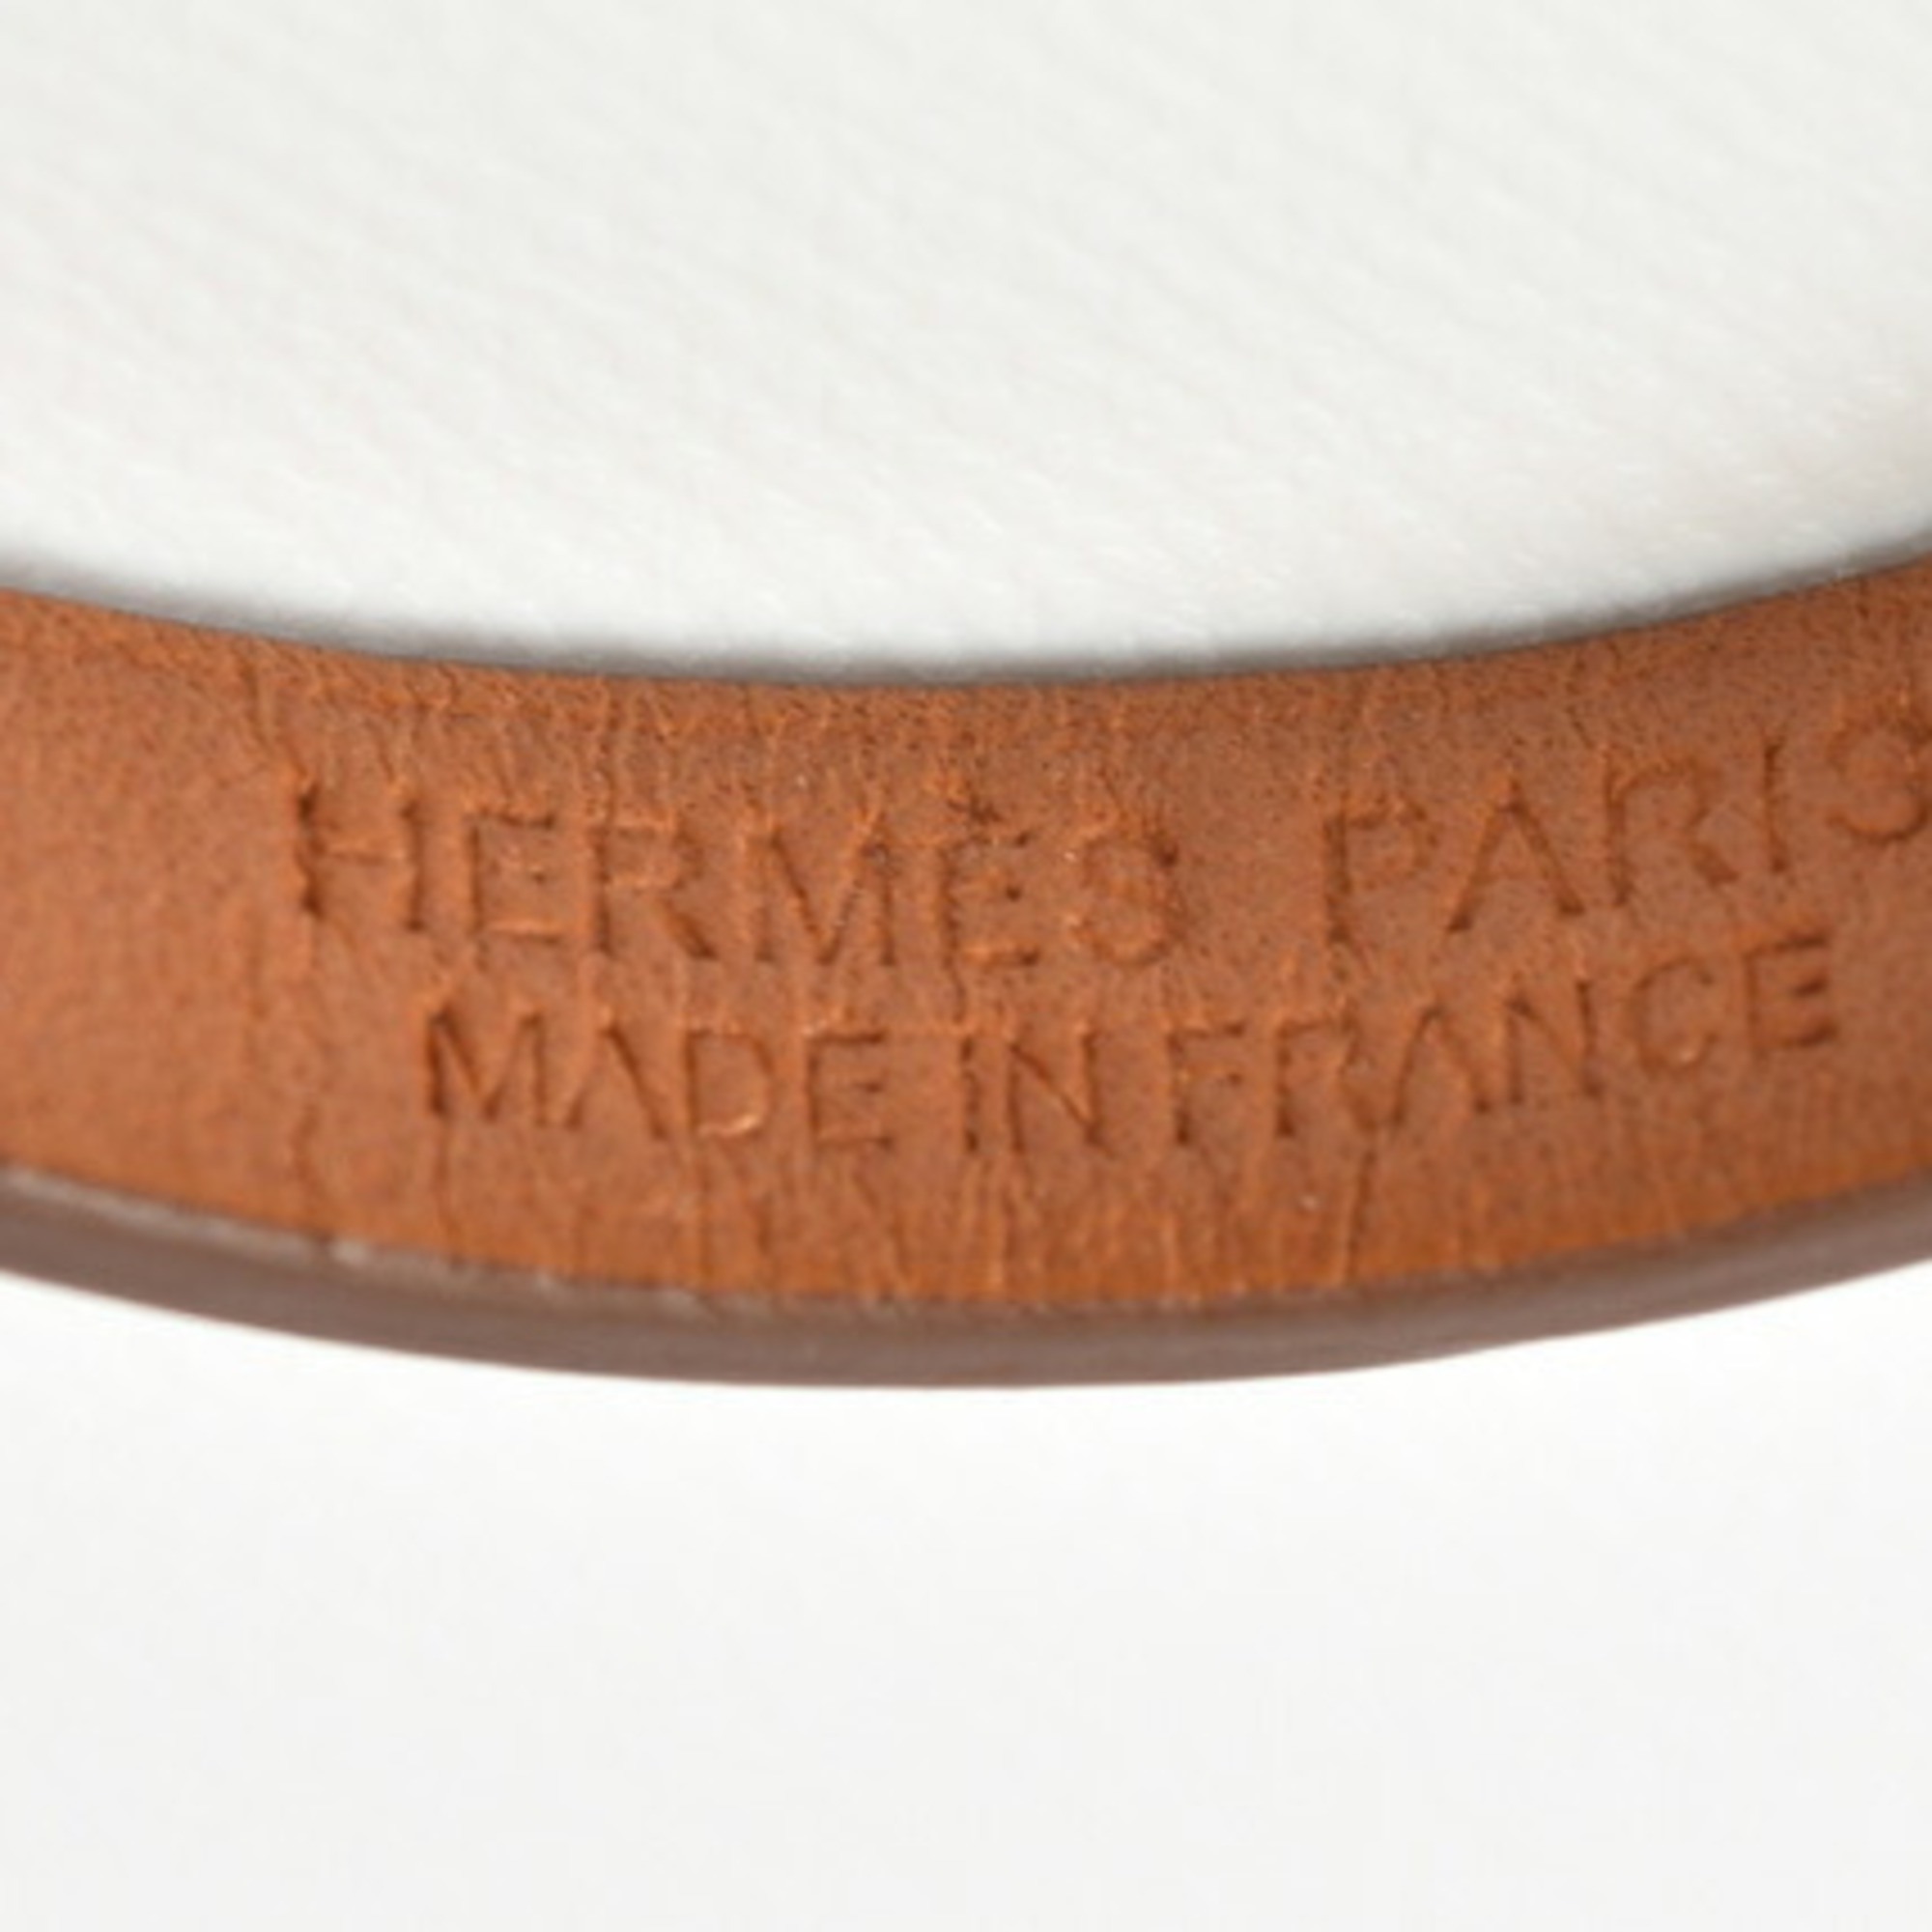 Hermes Bangle Bracelet HERMES Micro Rival Pink Brown Gold S Size